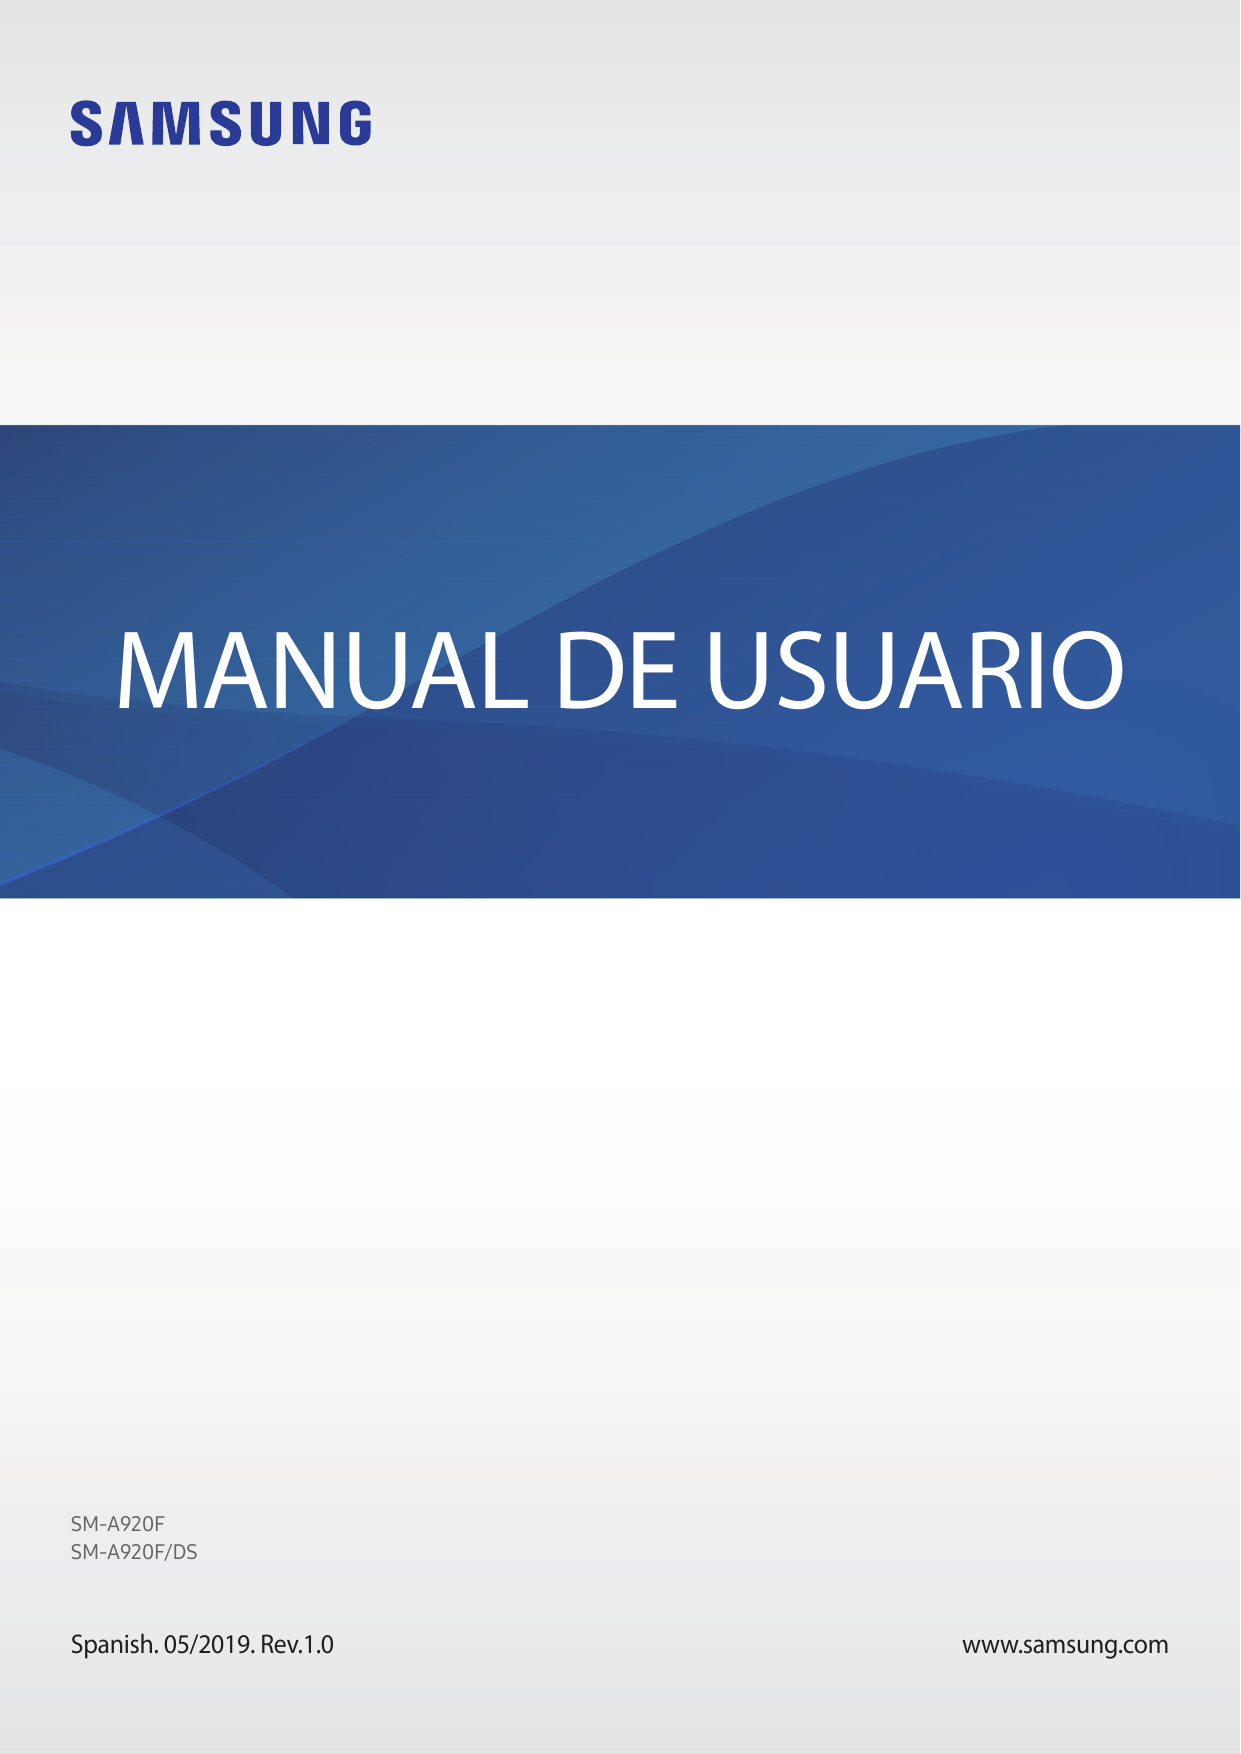 MANUAL DE USUARIOSM-A920FSM-A920F/DSSpanish. 05/2019. Rev.1.0www.samsung.com